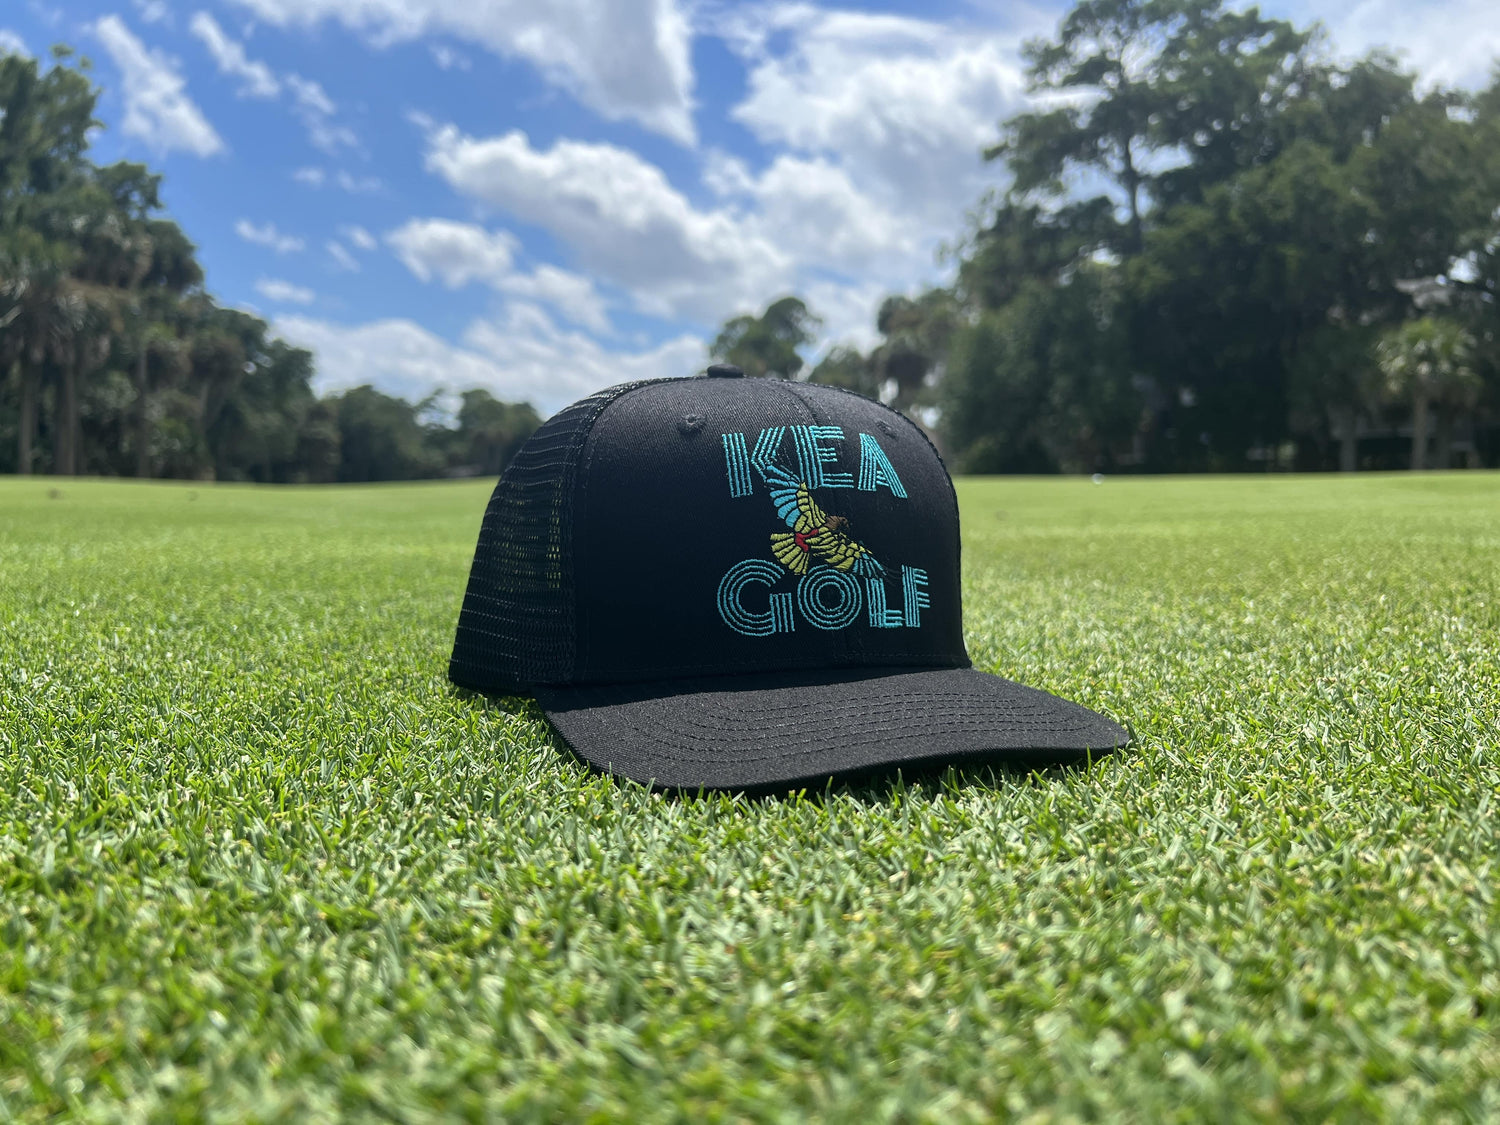 Men's Golf Hat, KEA Golf Apparel "The Shadow" Golf hat. black golf hat. black flat bill golf hat with mesh backing